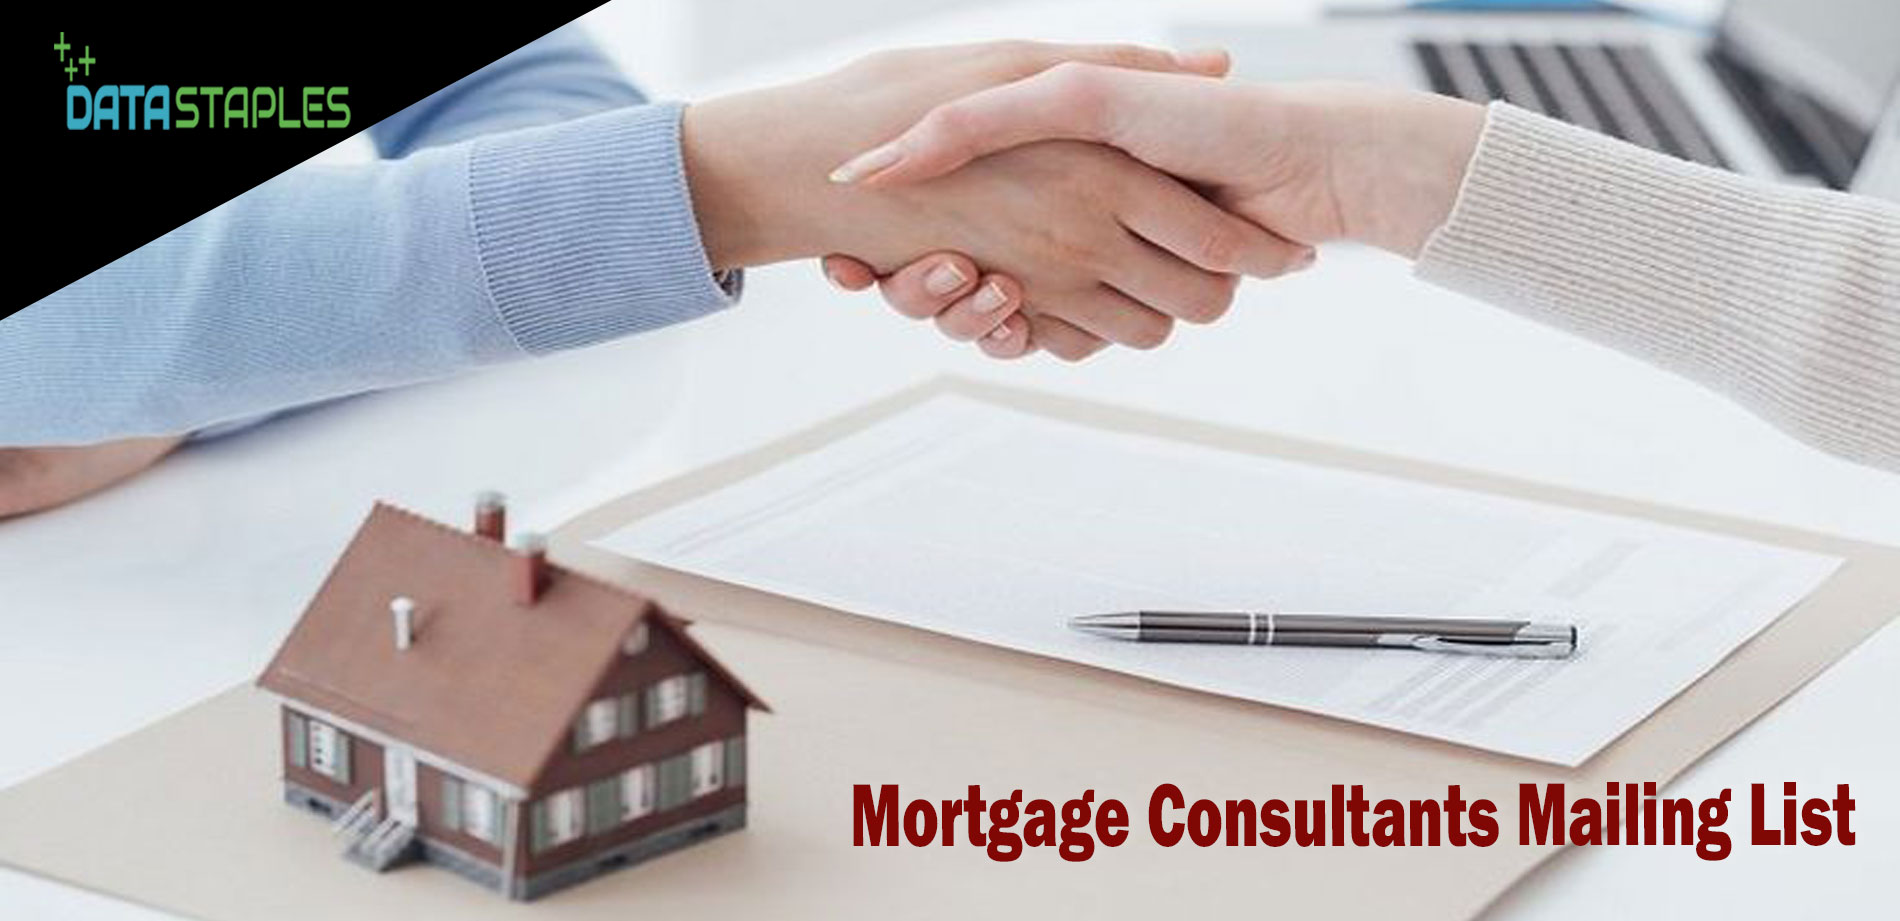 Mortgage Consultants Mailing List | DataStaples